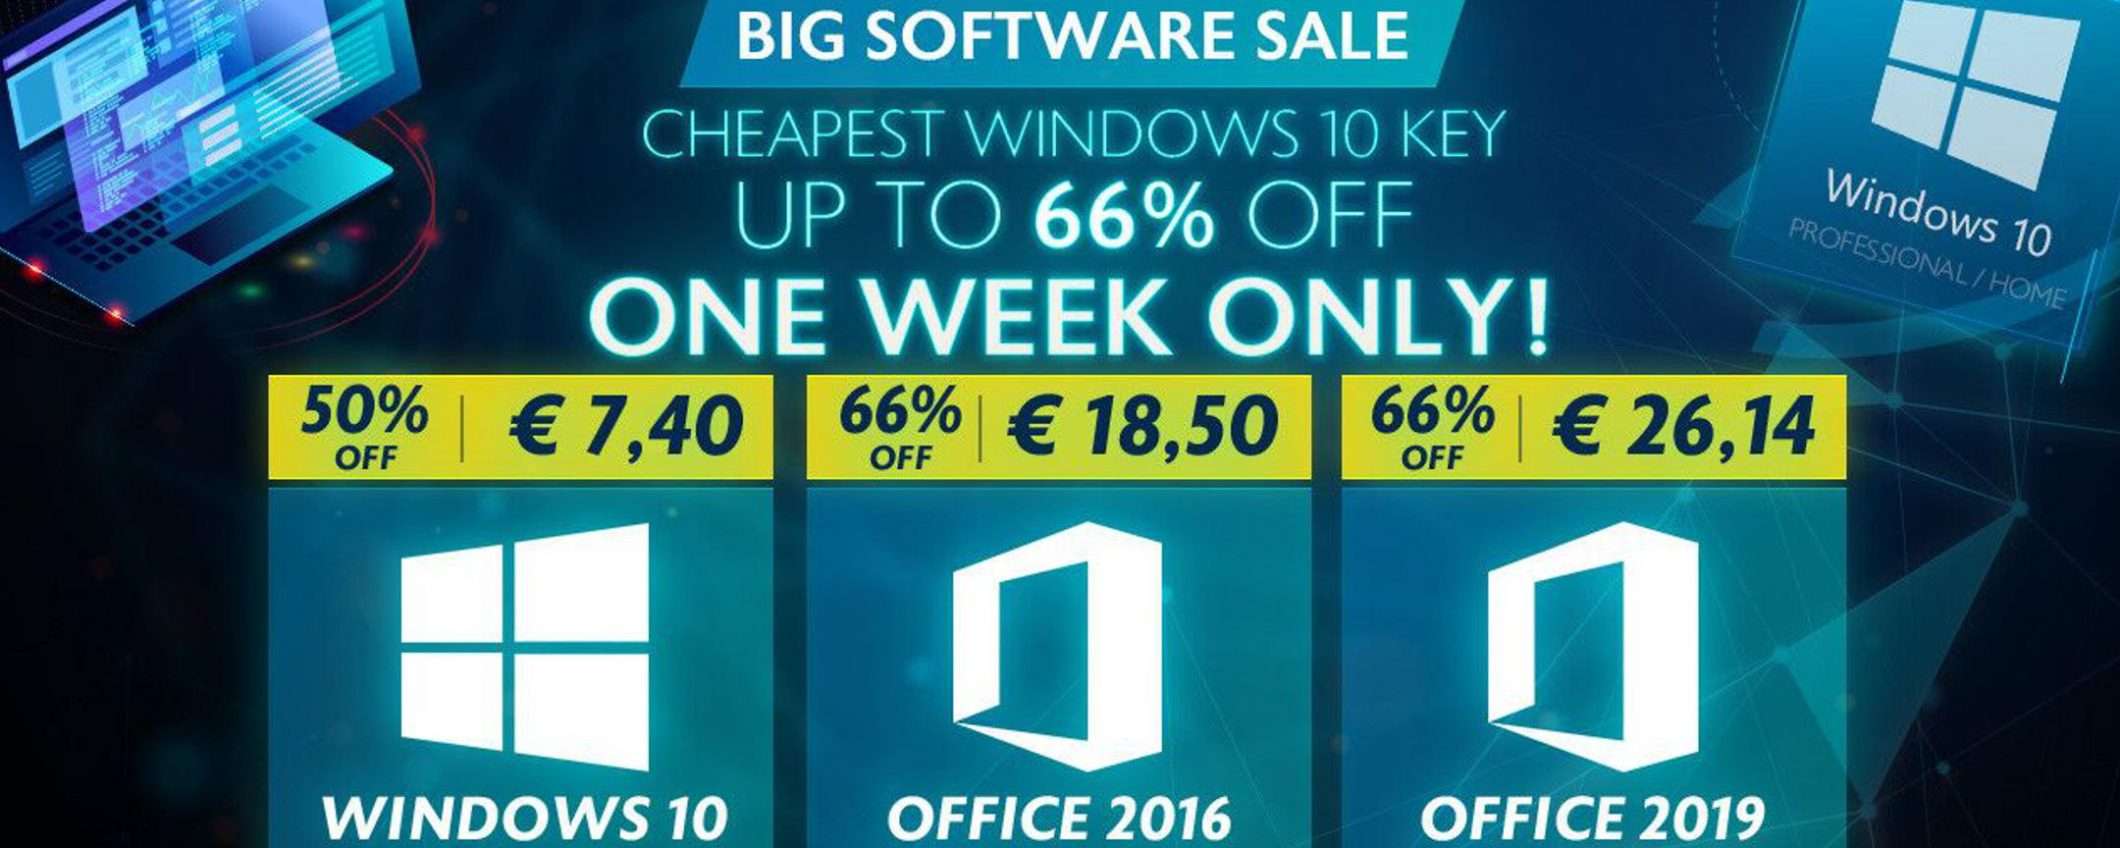 Offerta lampo: Windows 10 a 7€ e Office a 18€ su GoDeal24